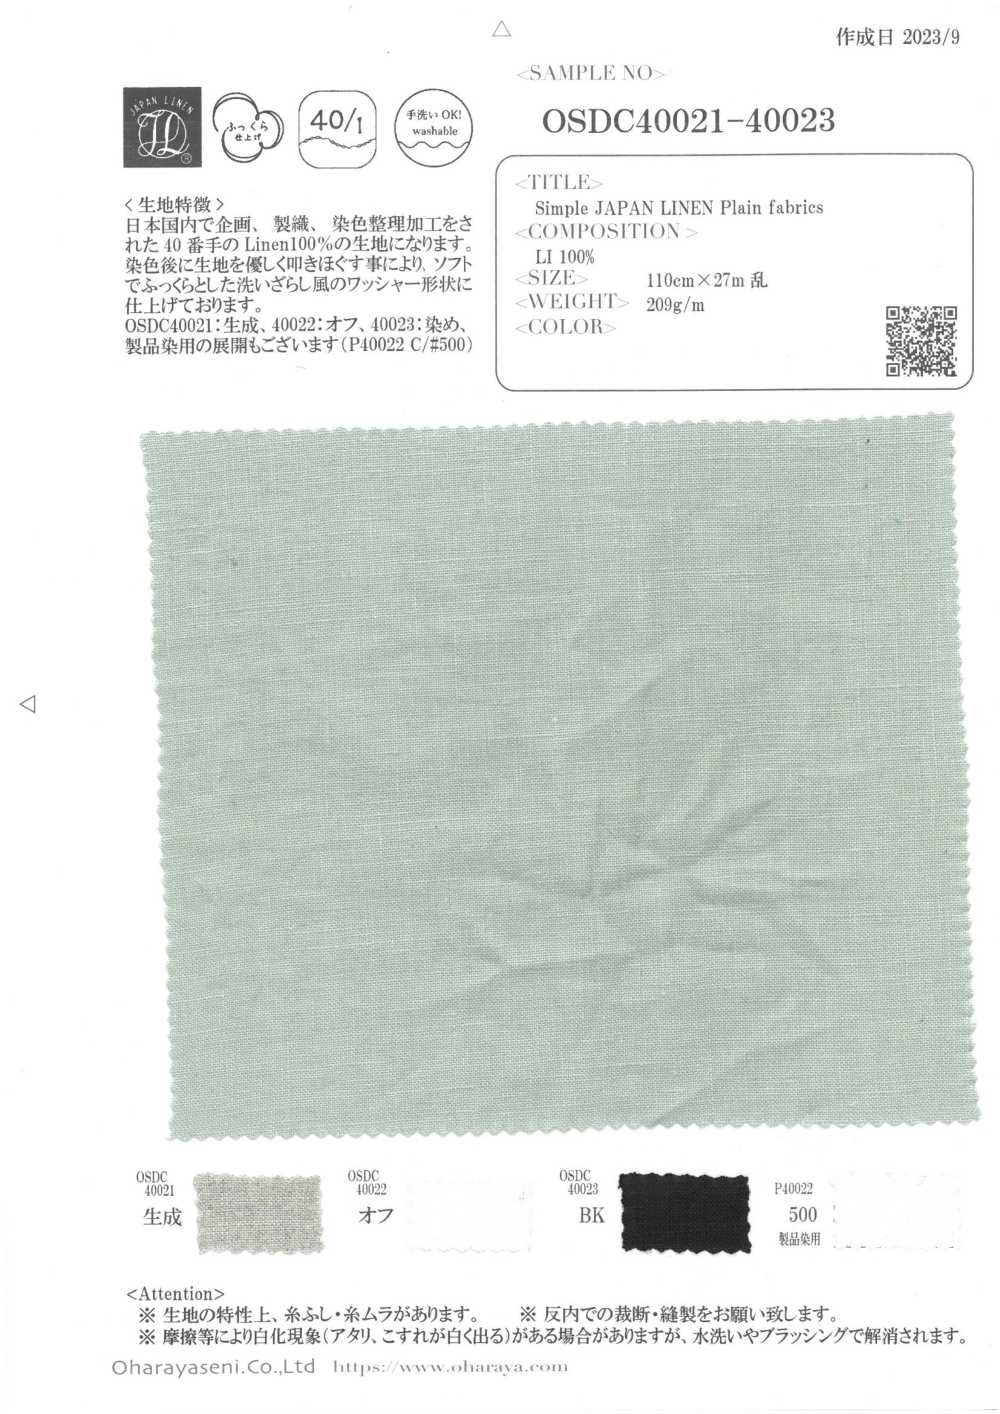 OSDC40021 Einfache JAPAN LEINEN Unistoffe (Ecru)[Textilgewebe] Oharayaseni